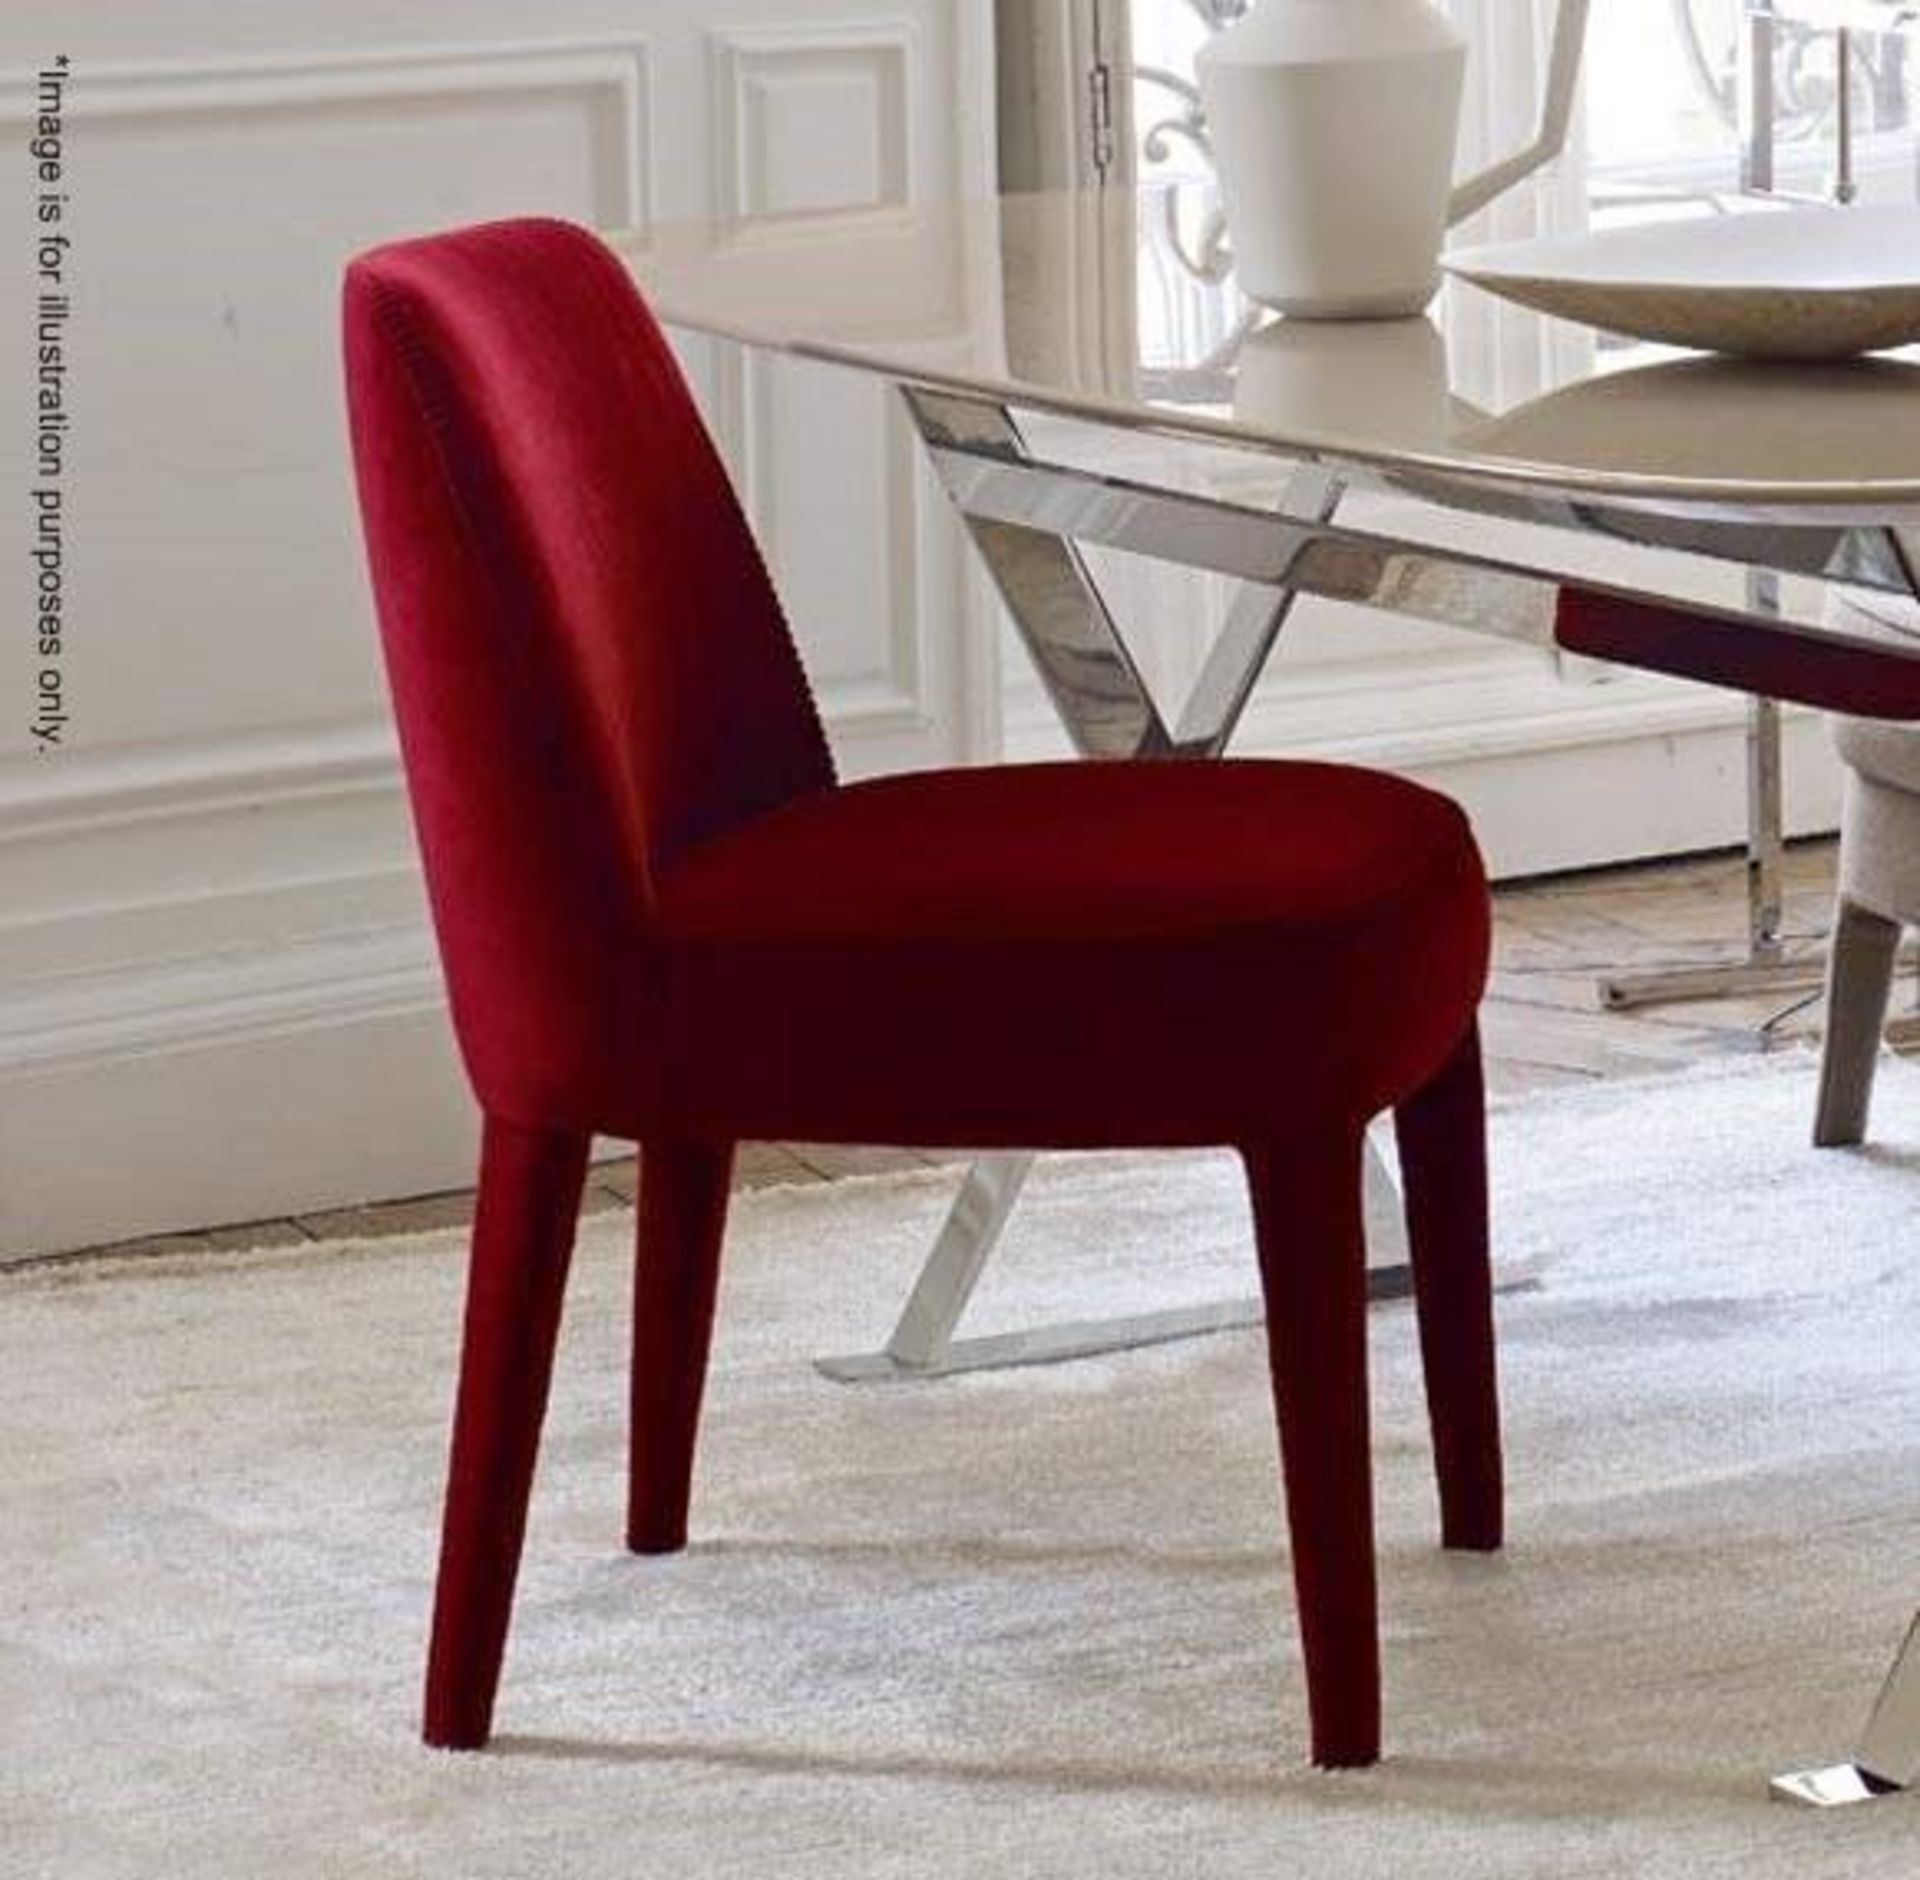 3 x Matching B&B ITALIA Maxalto "Febo" Designer Chairs In An Opulent GREY Velvet Fabric - Ex-Display - Image 2 of 6